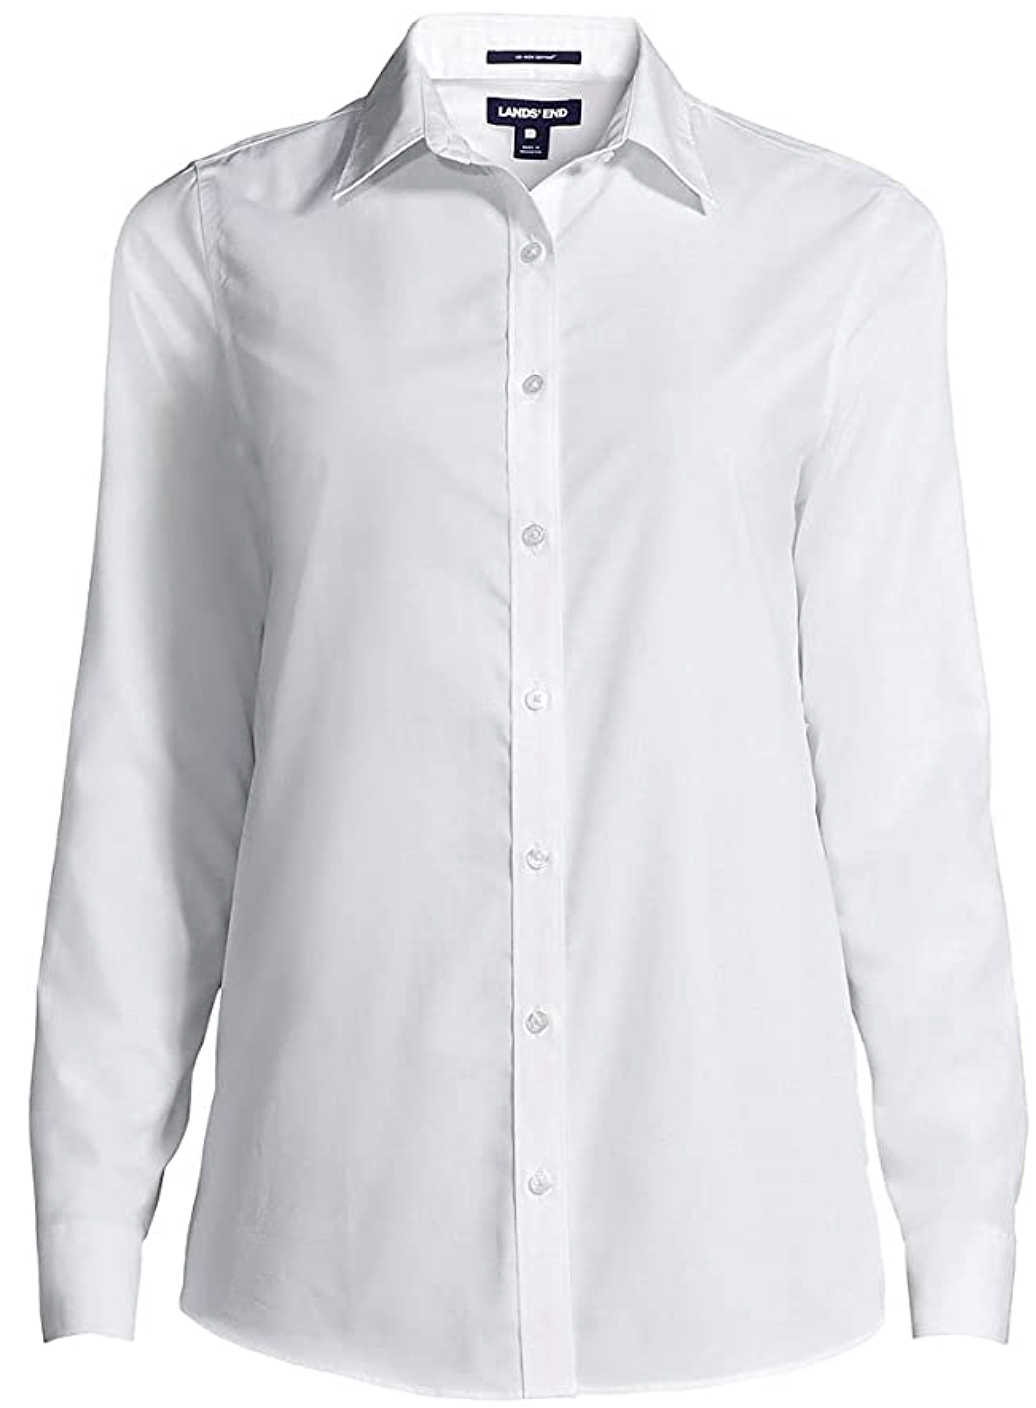 Lands\u2019 End Long Sleeve Shirt white business style Fashion Formal Shirts Long Sleeve Shirts Lands’ End 